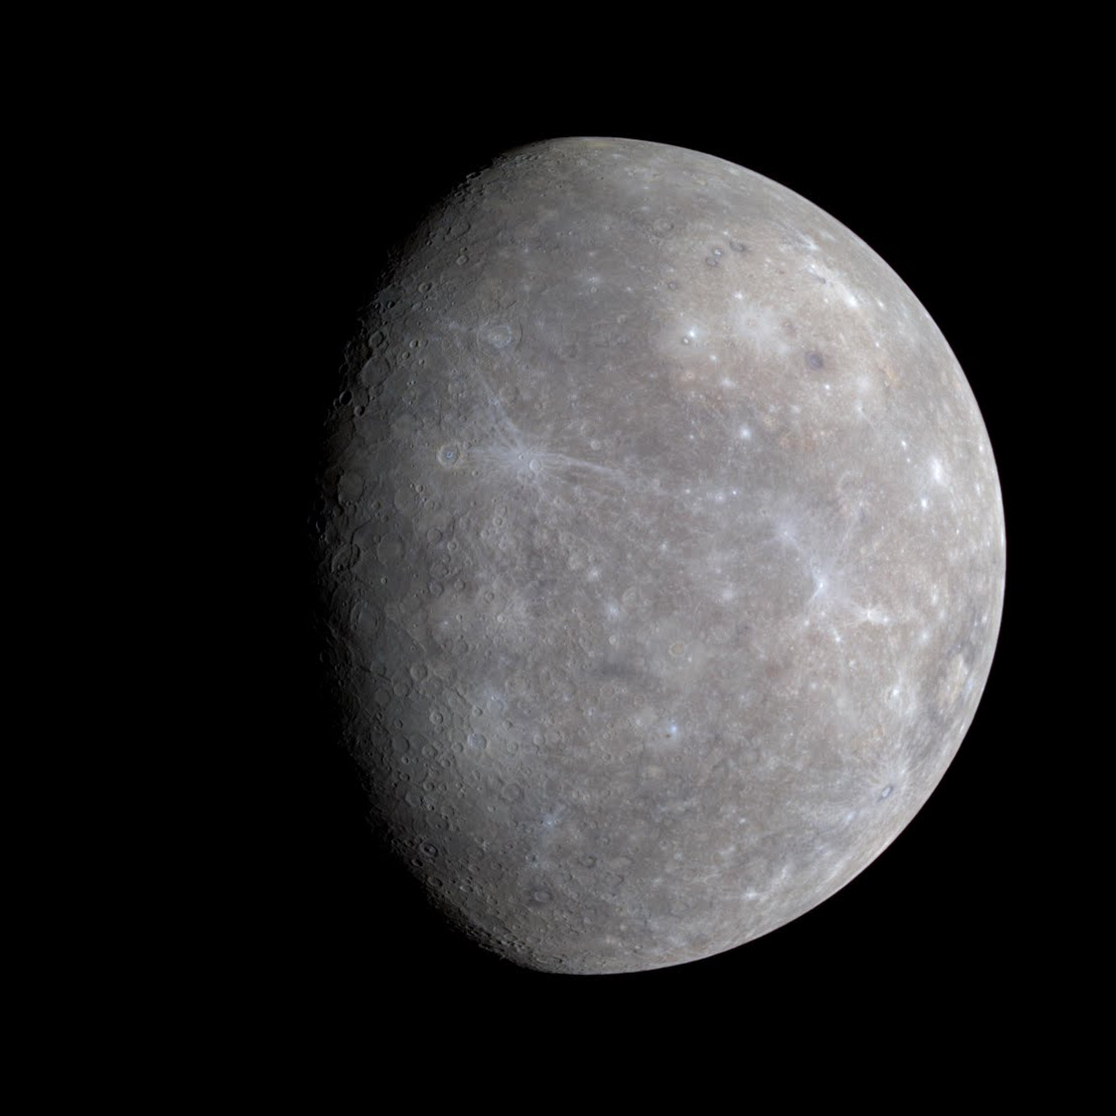 Снимок поверхности Меркурия. Источник Carnegie Institution of Washington, NASA.